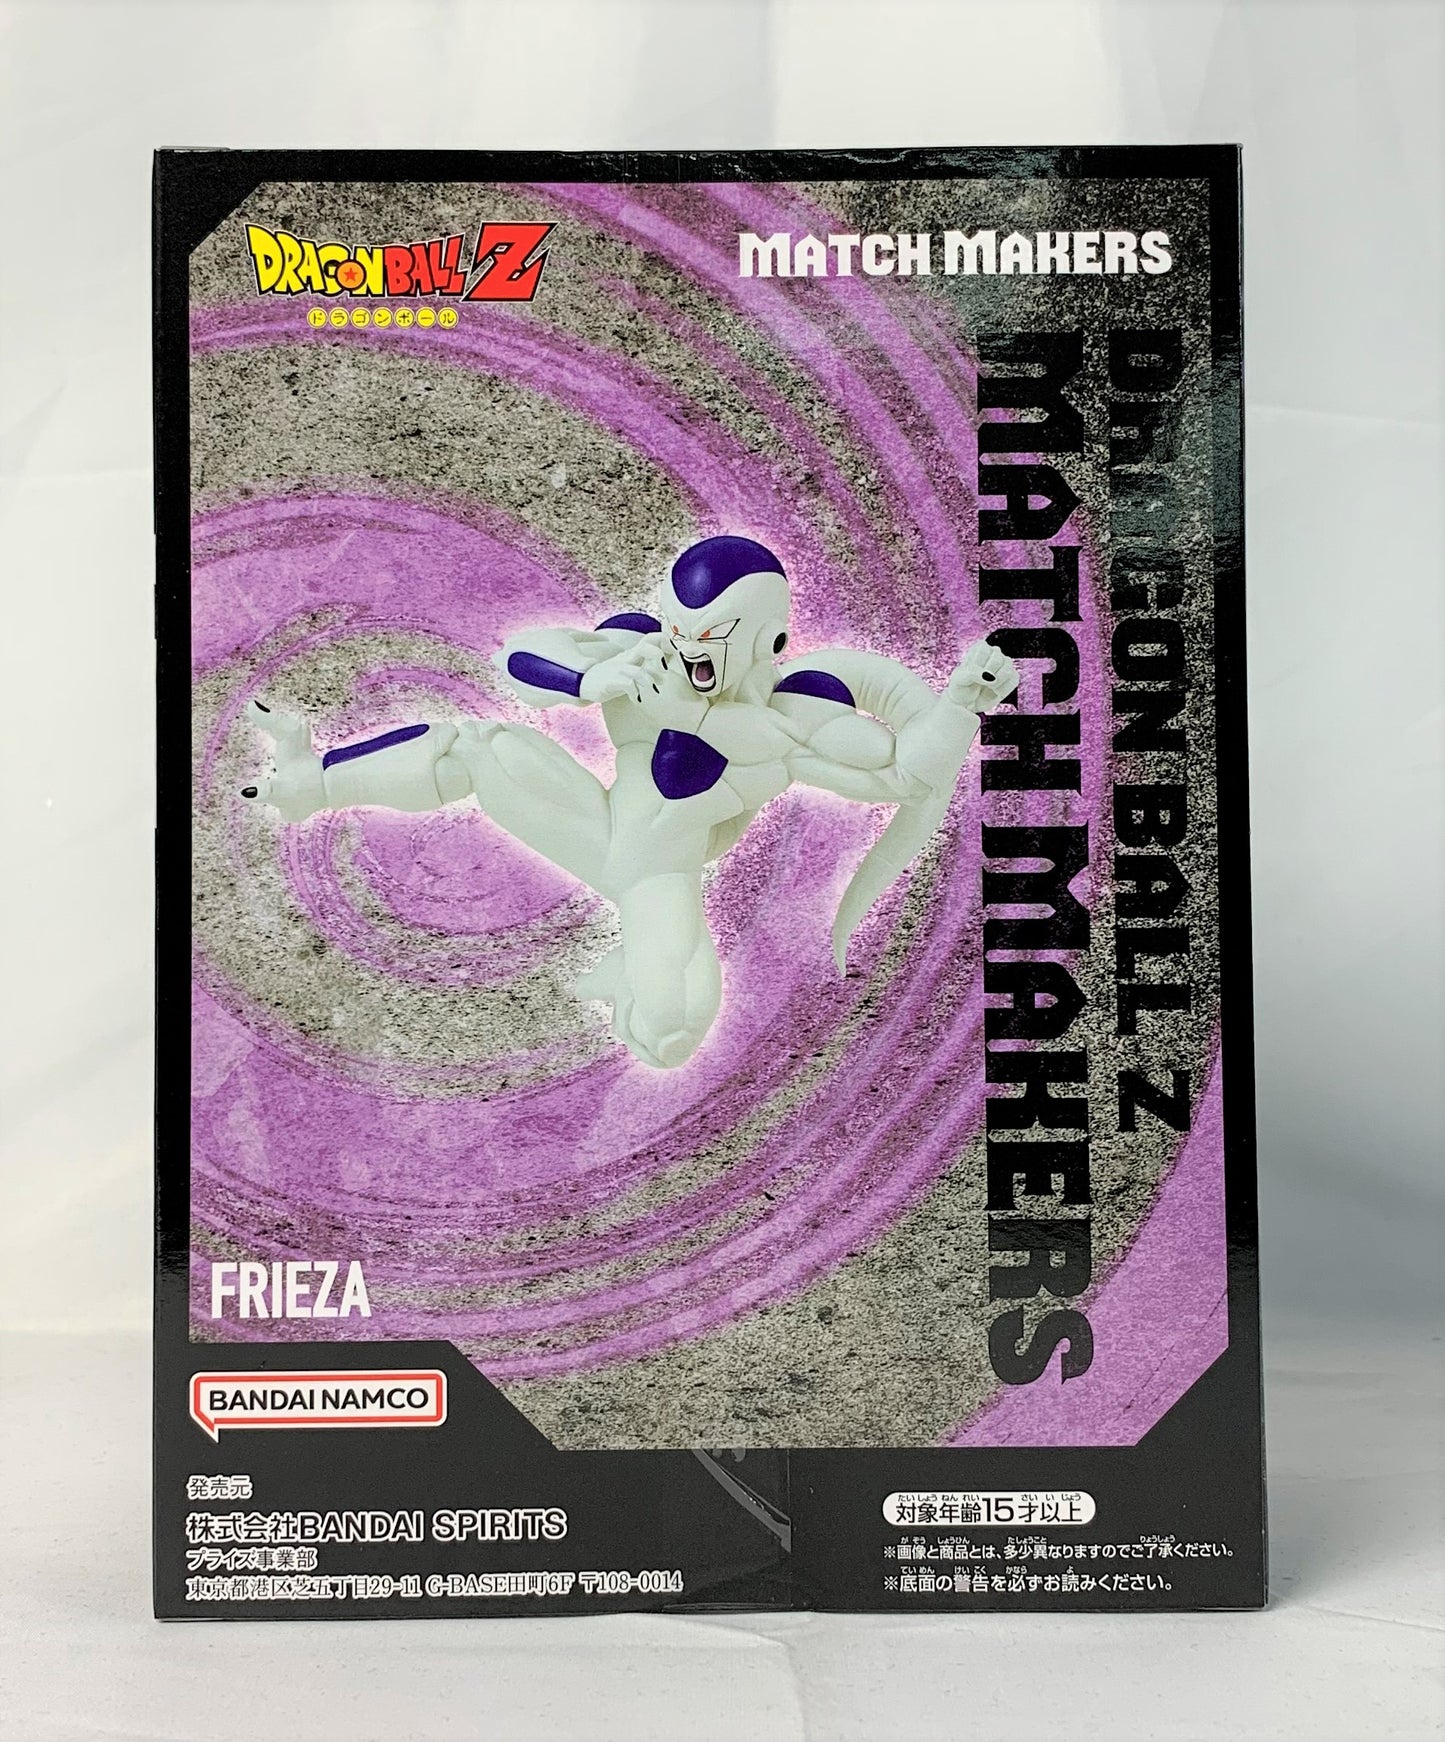 Bandai Spirits Dragon Ball Z MATCH MAKERS-Freeza-